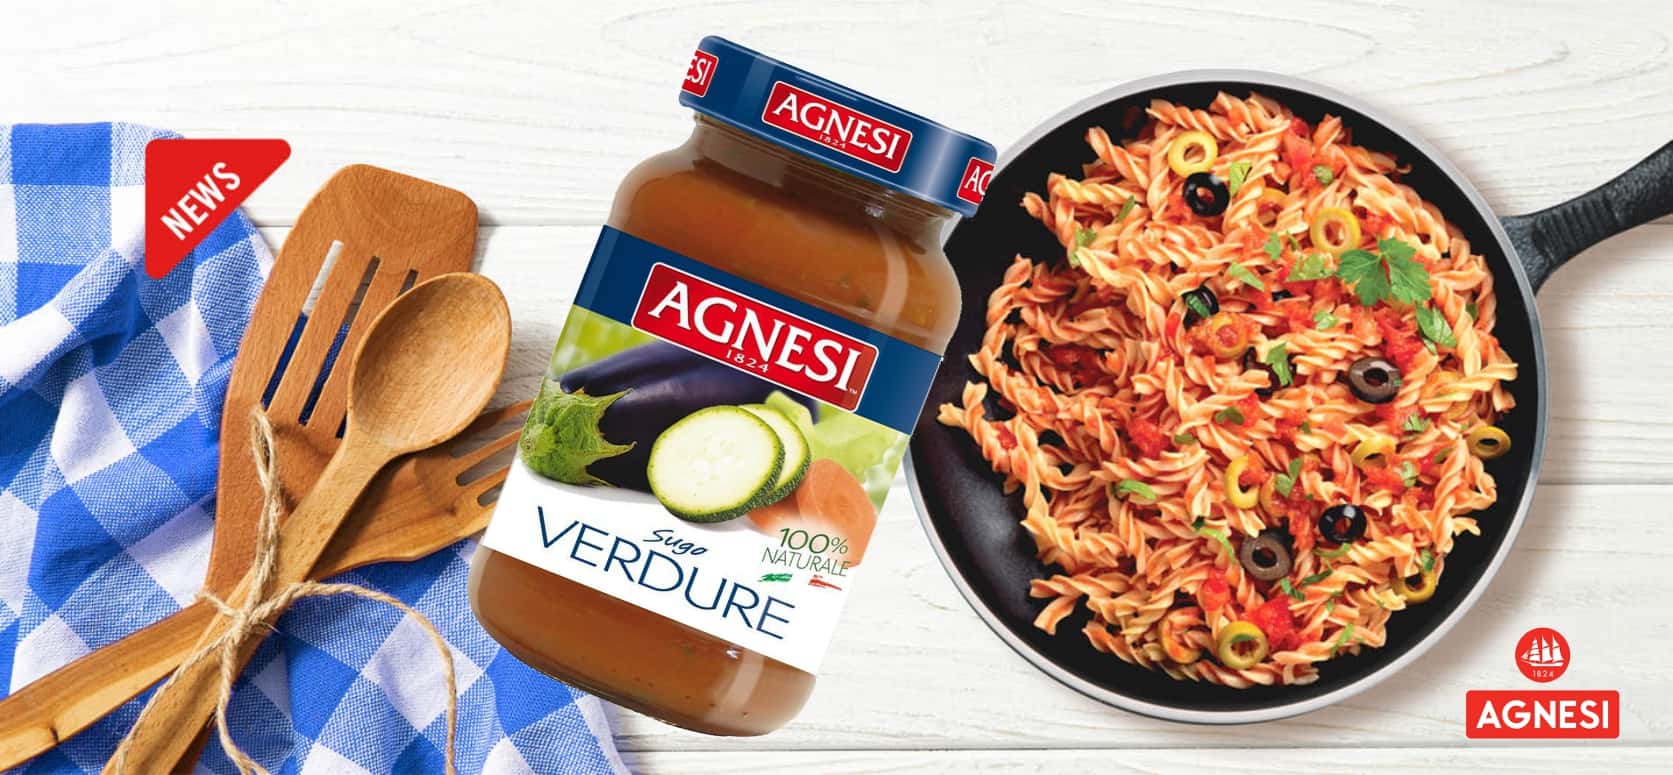 Agnesi義大利蕃茄鮮蔬麵醬 Agnesi Verdure 400g